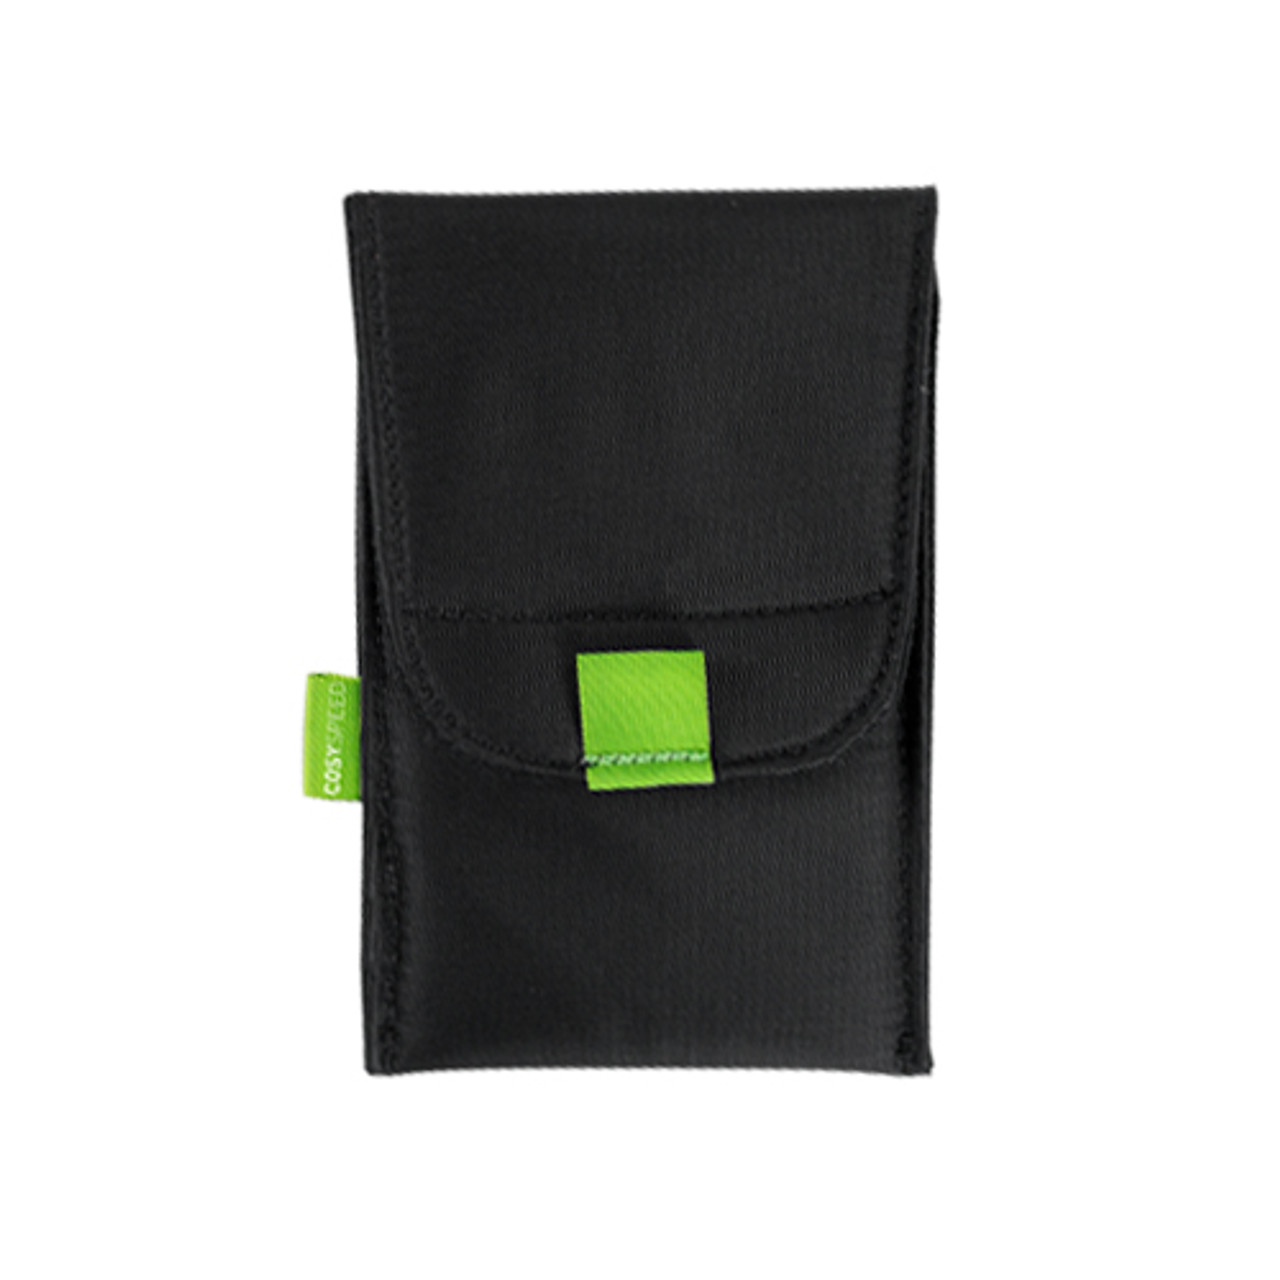 Cosyspeed Phonebag 135 Black/Green